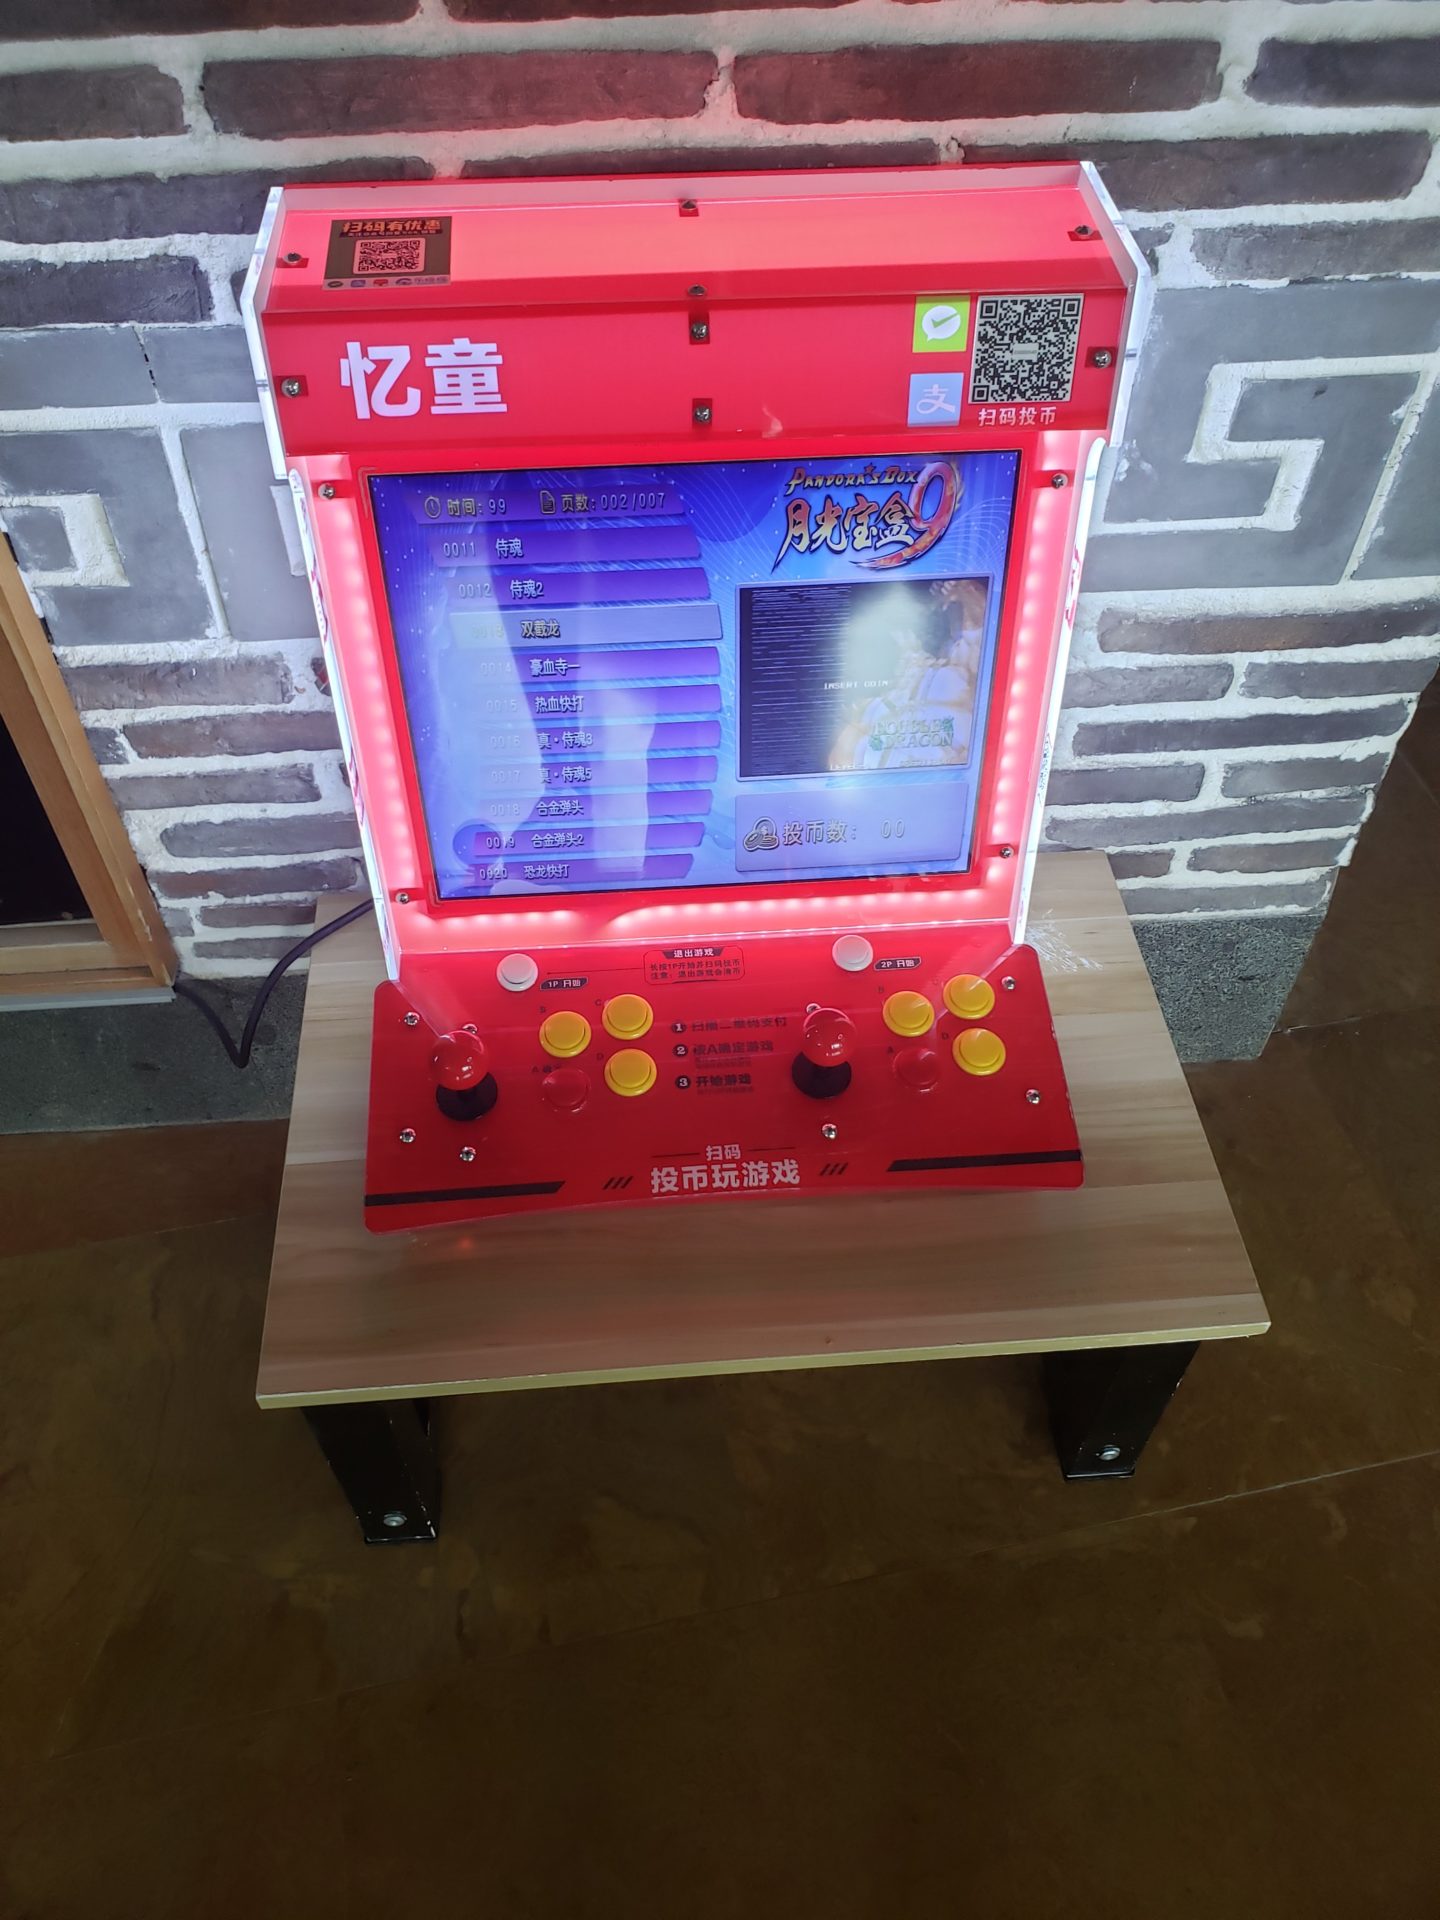 a red arcade game machine